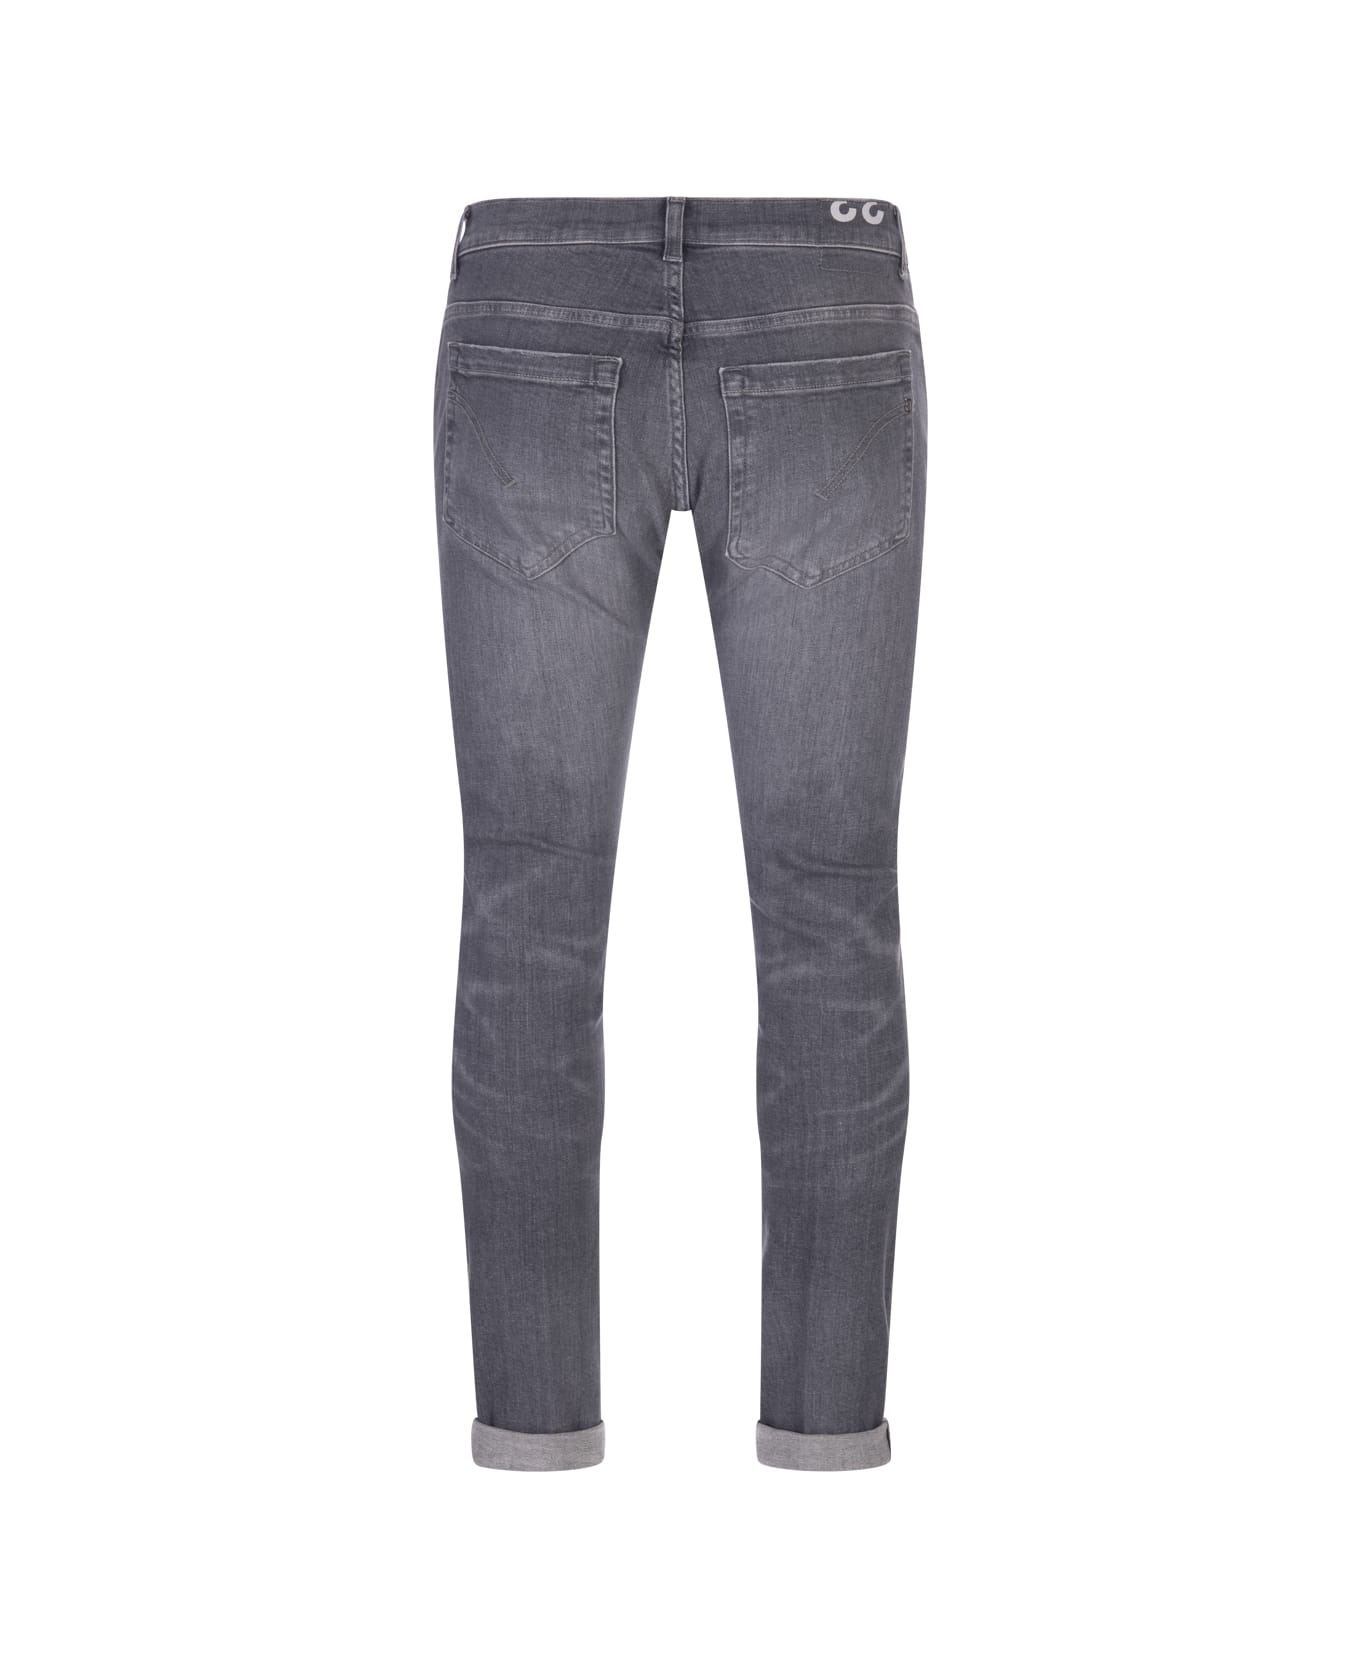 Dondup George Skinny Fit Jeans In Grey Stretch Denim - Grey デニム